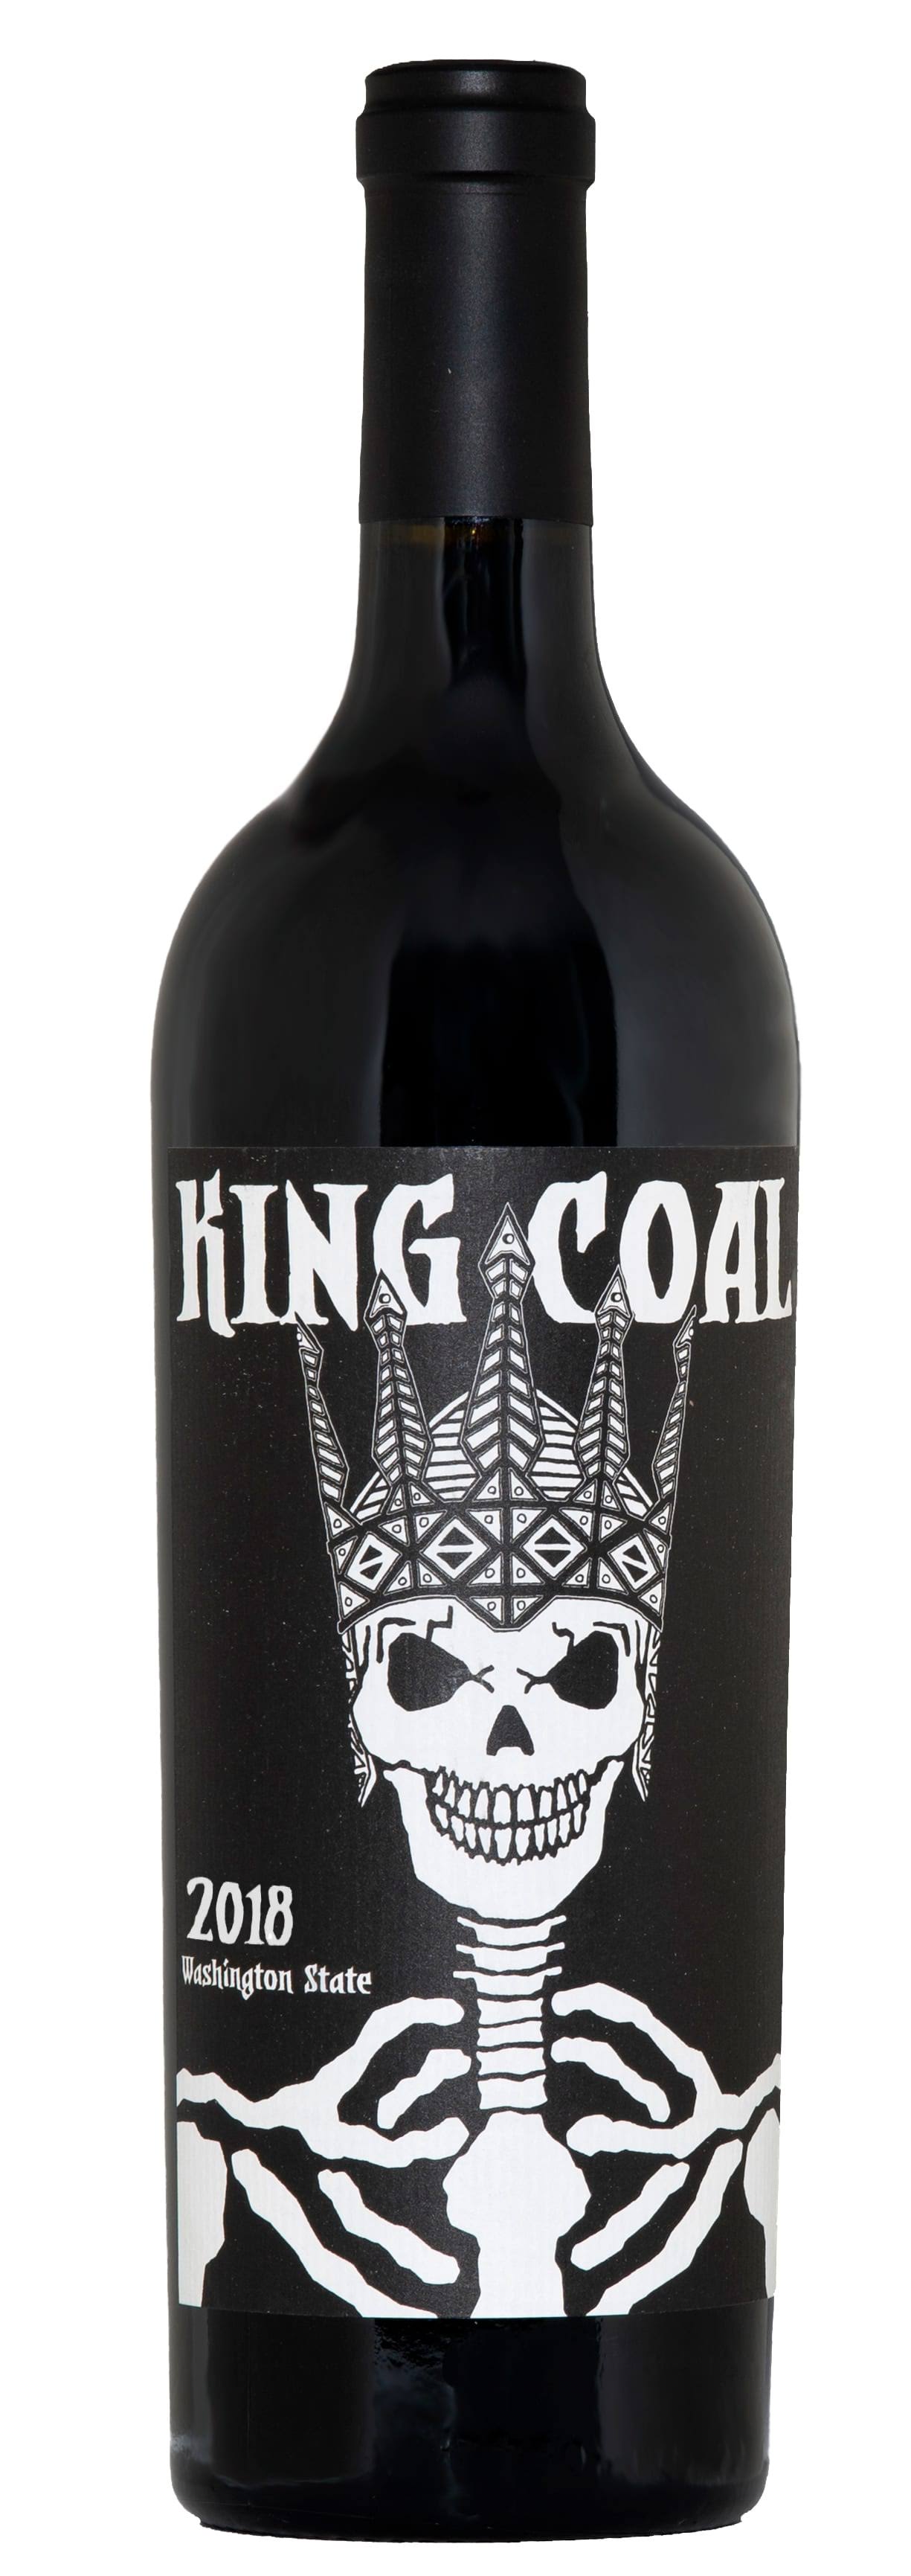 King Coal Wine, Washington State, 2017 - 750 ml